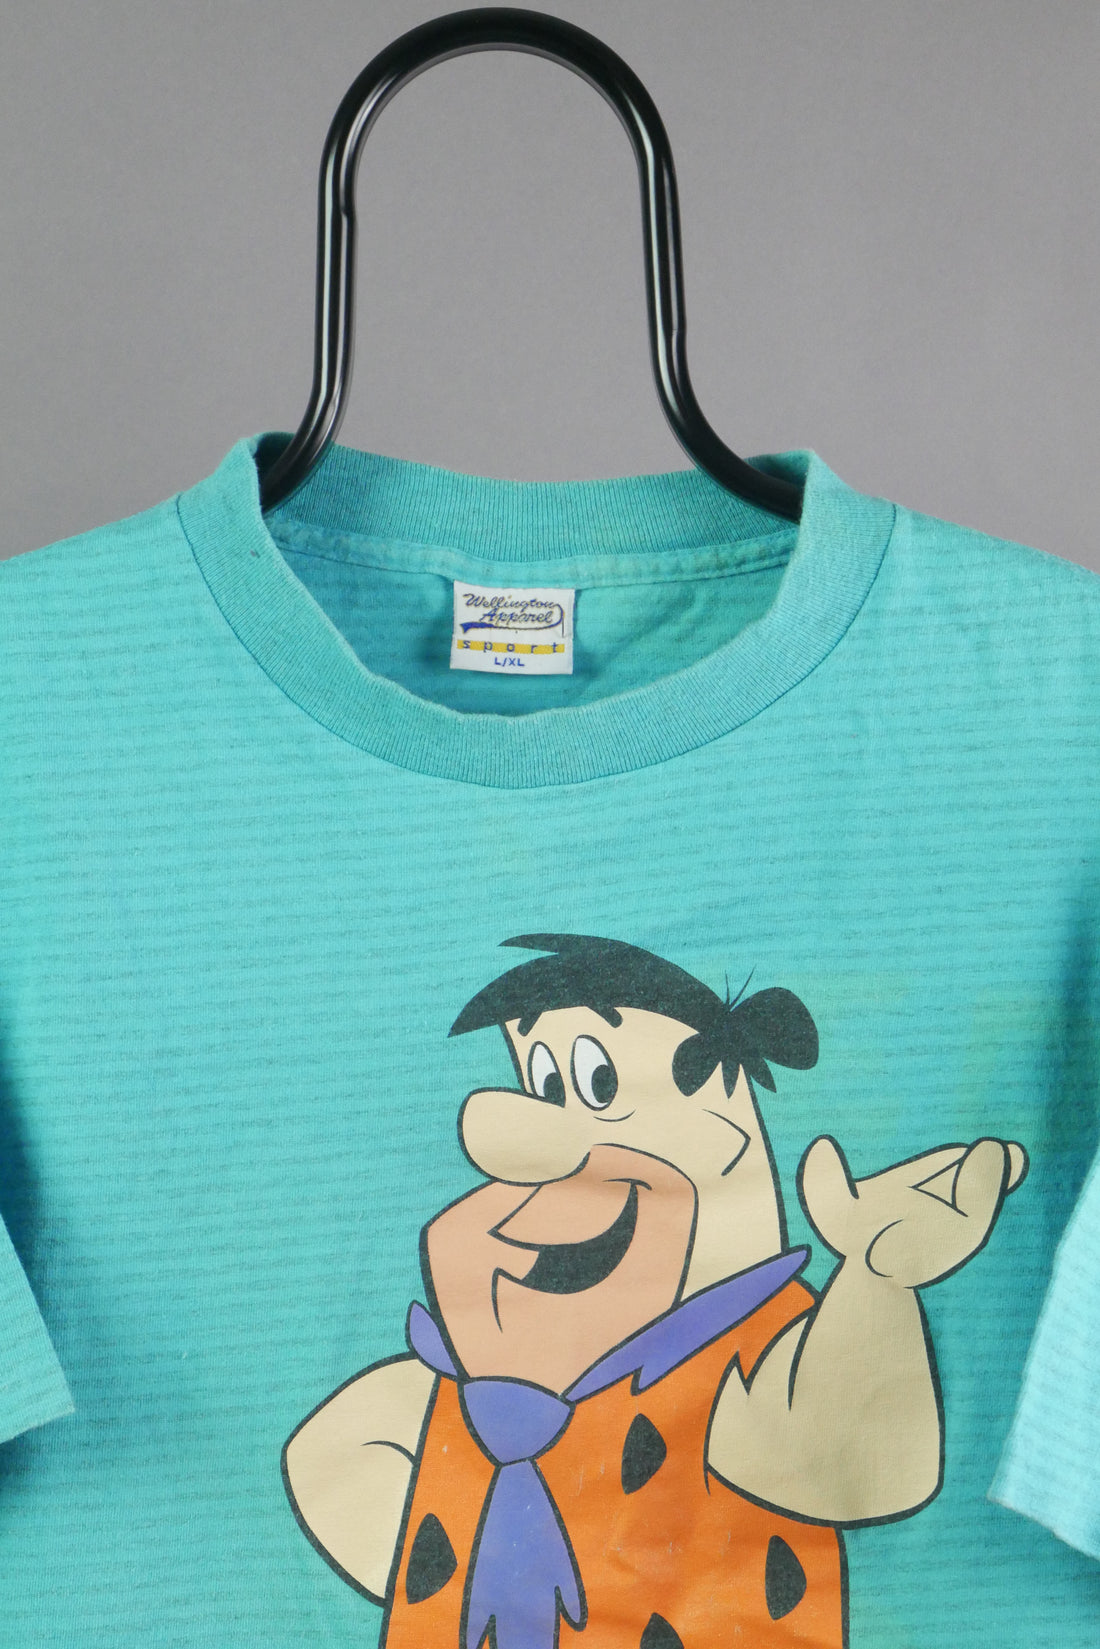 The Vintage Fred Flintstone Graphic Striped T-Shirt (L/XL)